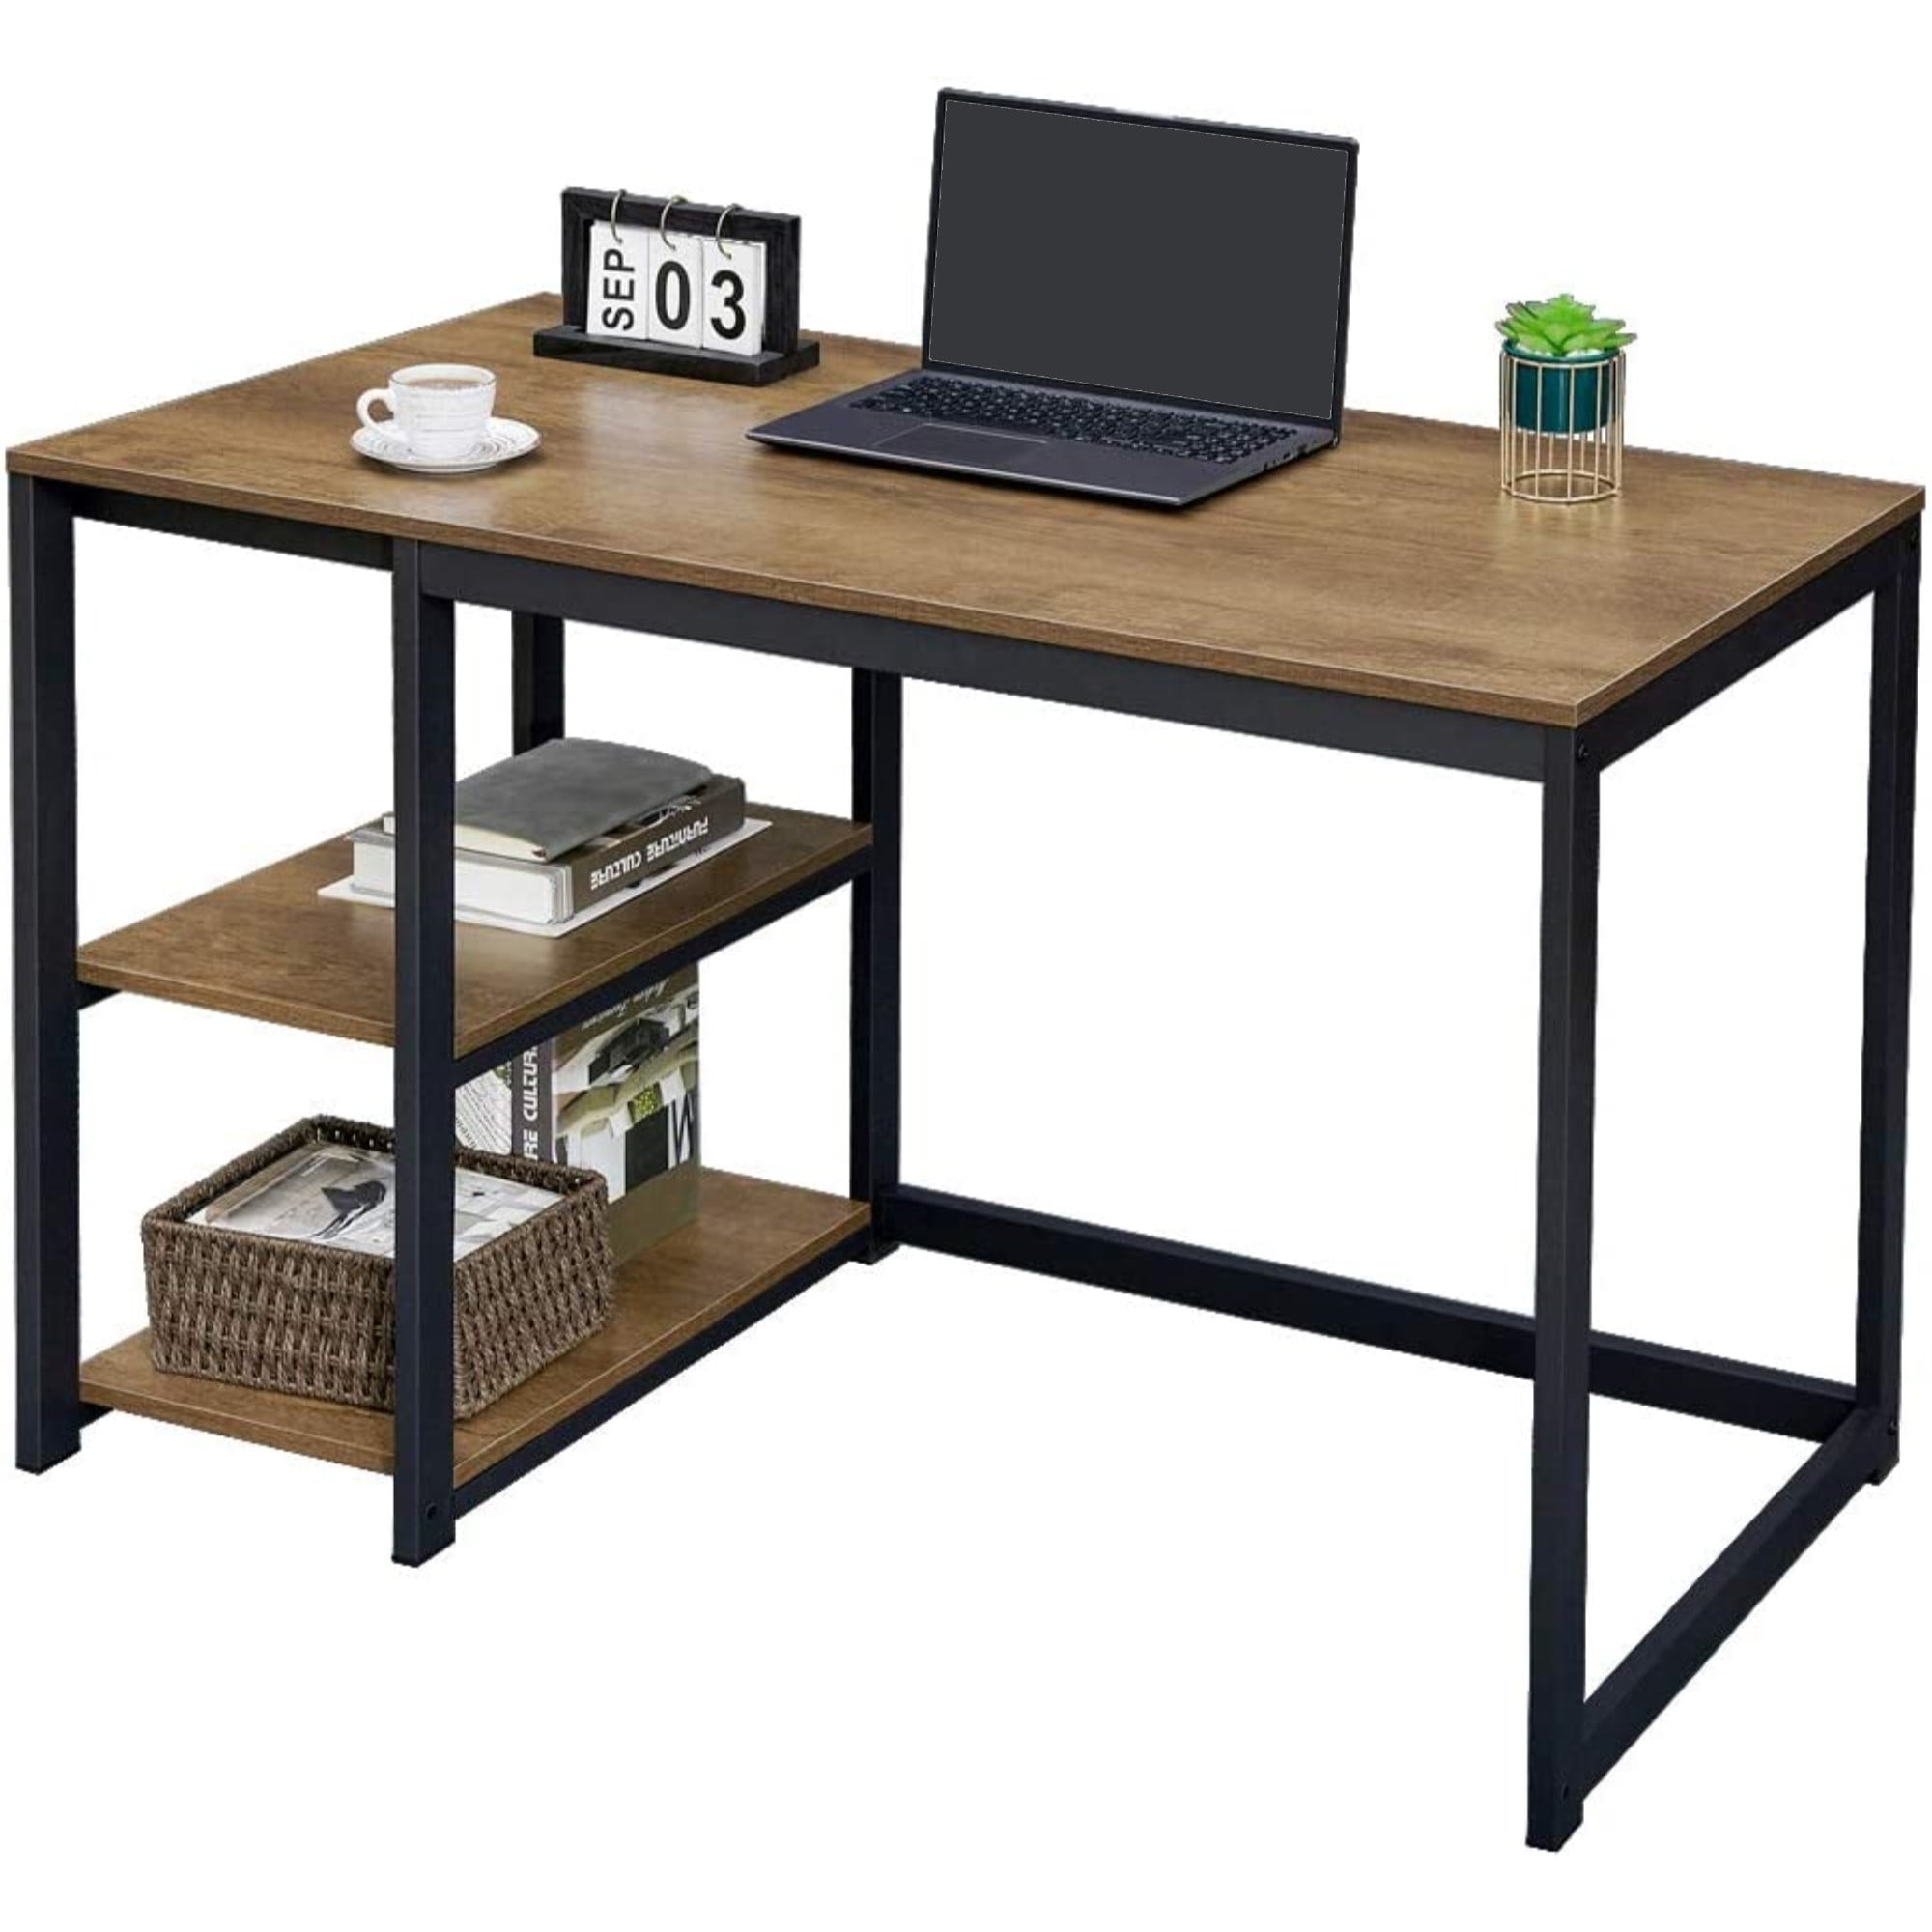 Strong Solid Wood Legs 47 Home Office Desk Writing Trestle Desk Modern Simple Workstation GreenForest Computer Desk with Shelves White